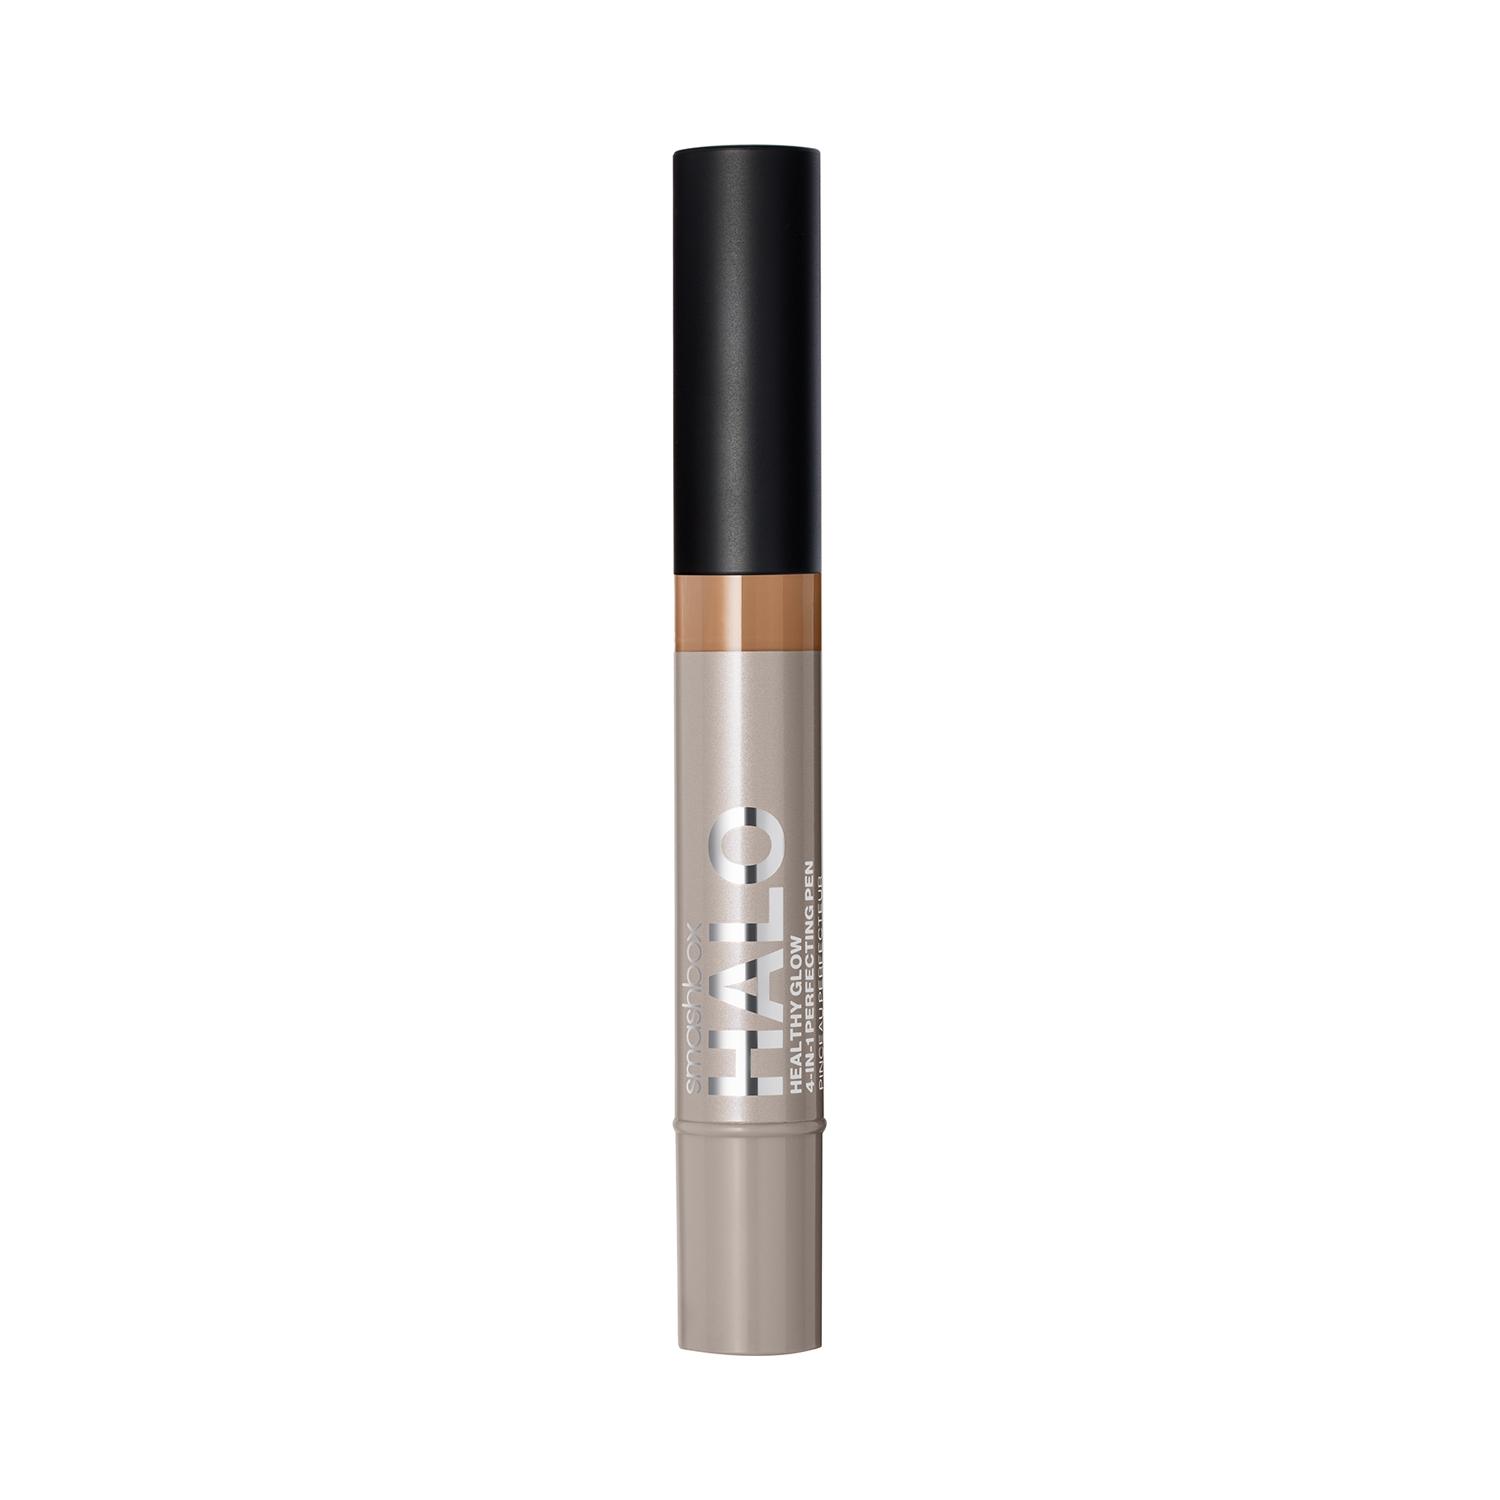 smashbox halo healthy glow 4-in-1 perfecting concealer pen - m10n (3.5ml)